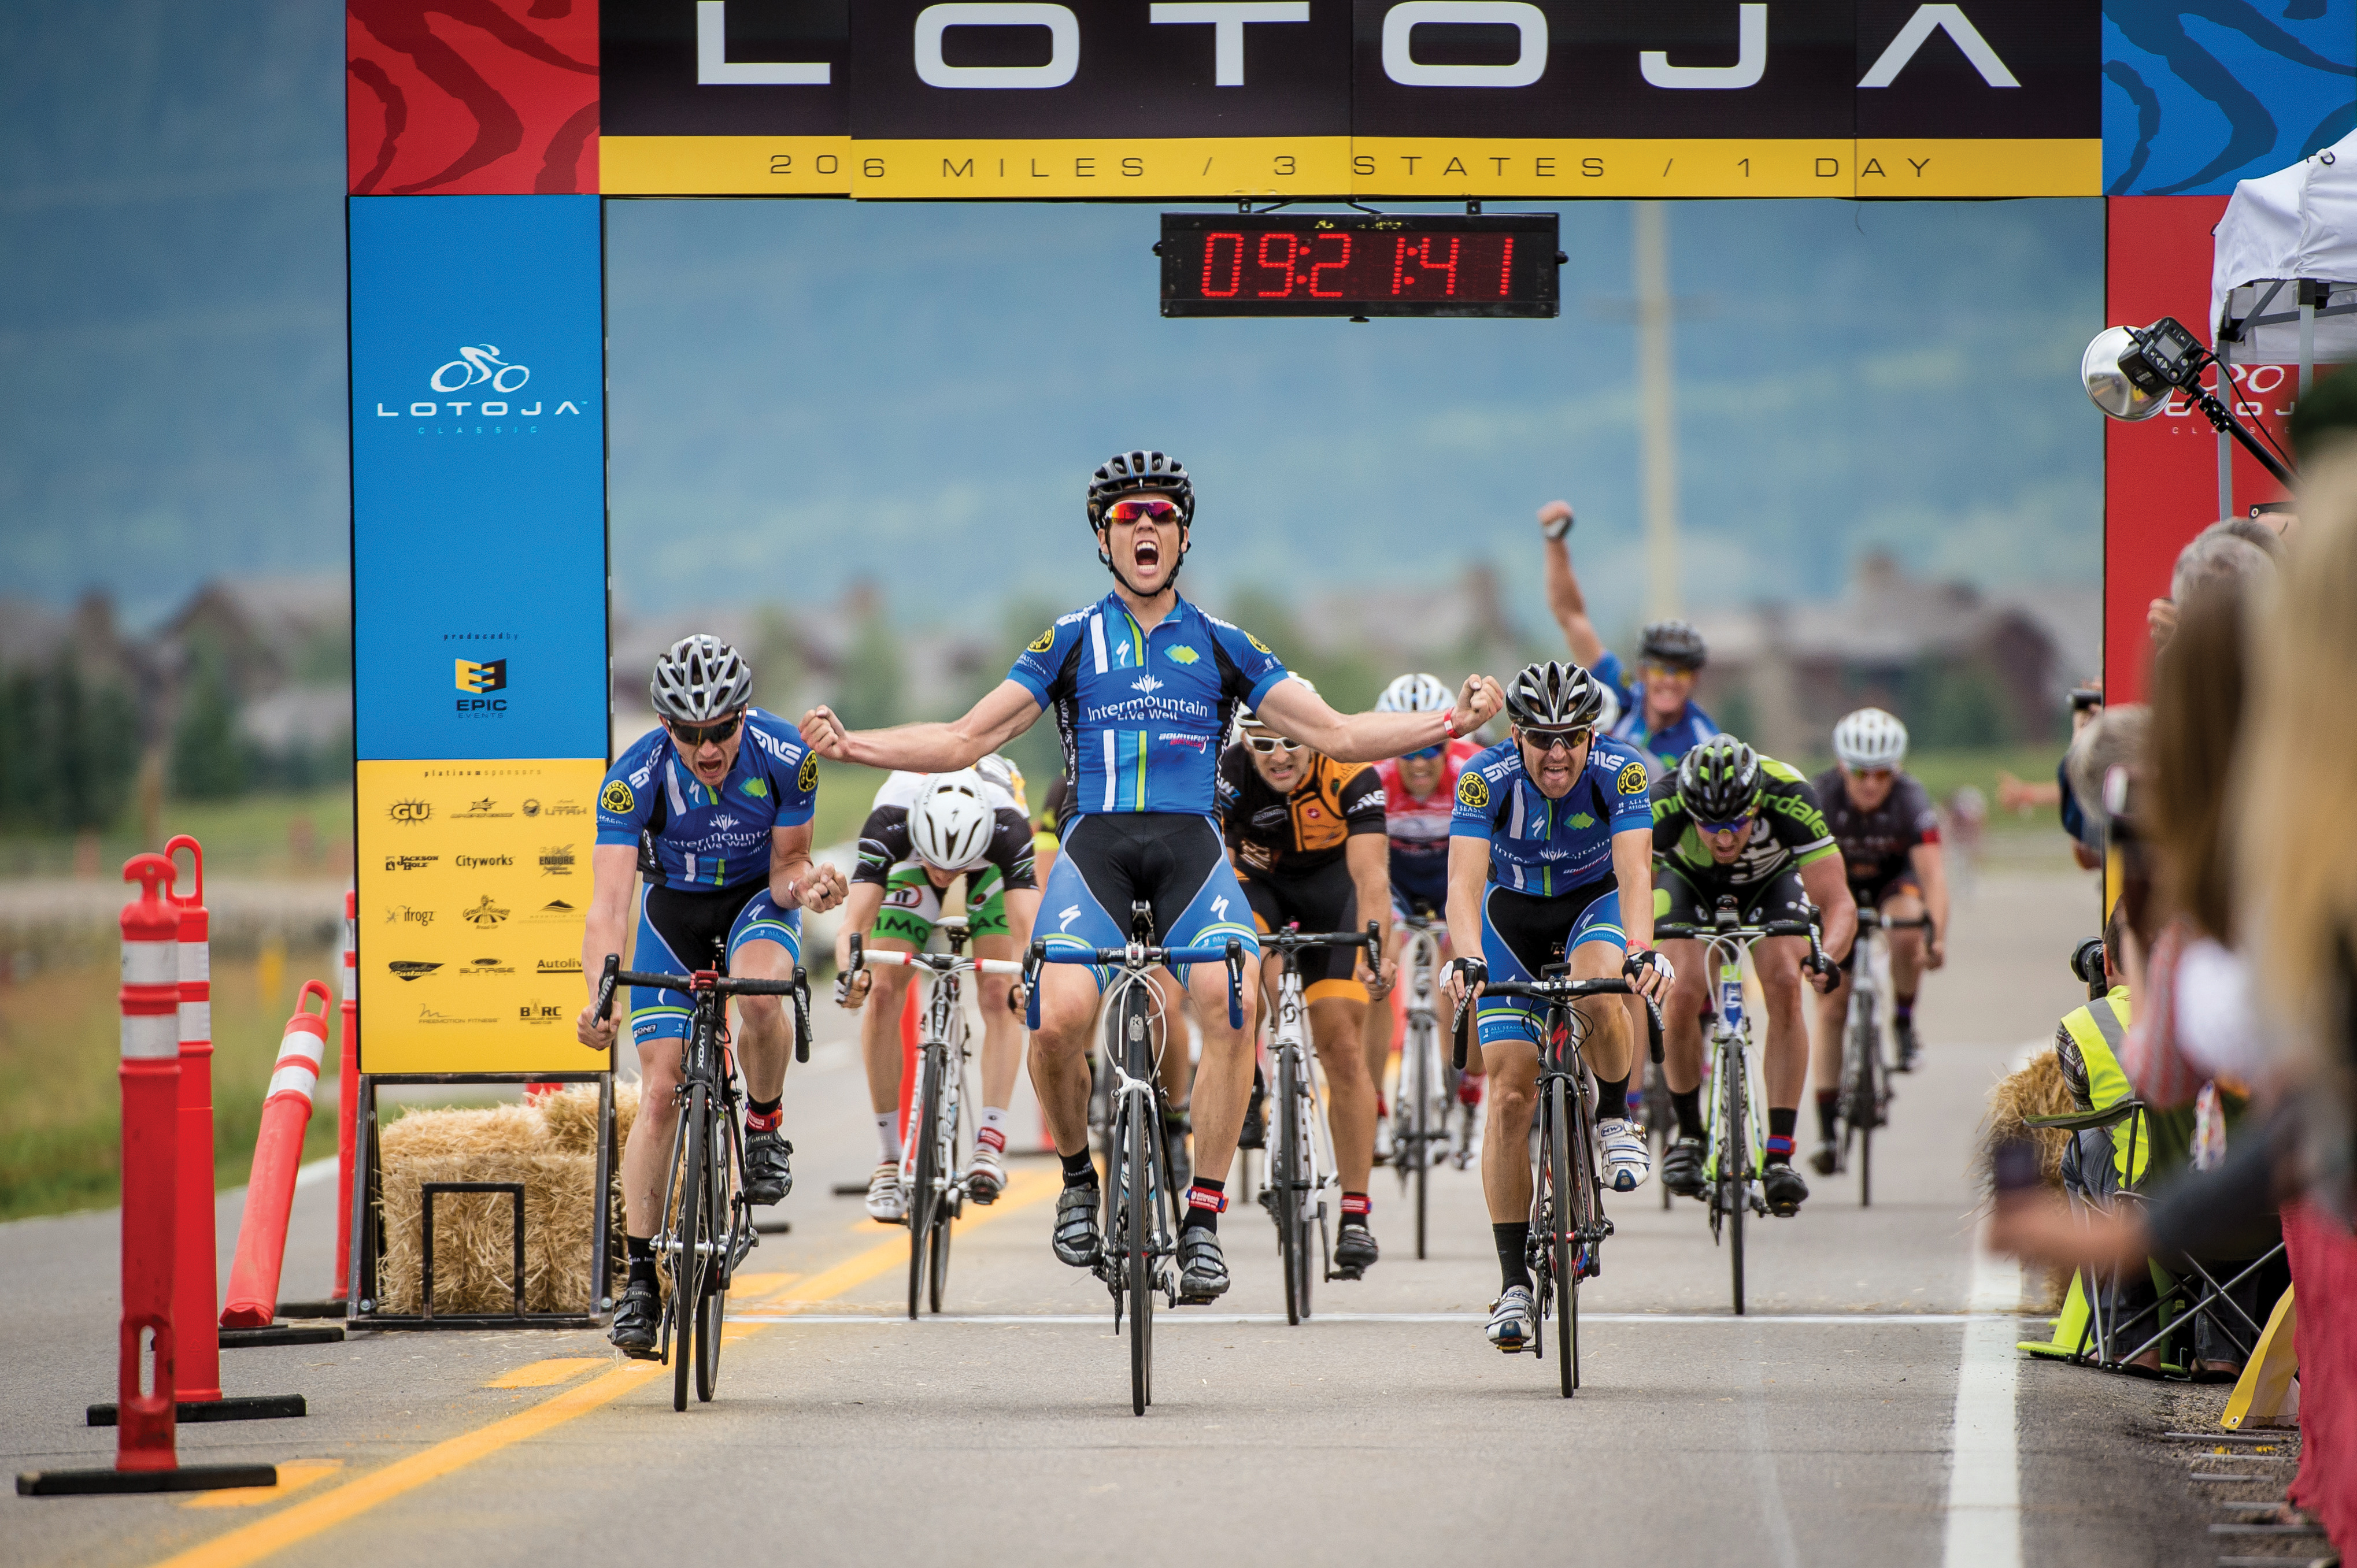 206 Mile Lotoja Classic to be Held Saturday, September 6, 2014 from Logan, Utah to Jackson, Wyoming